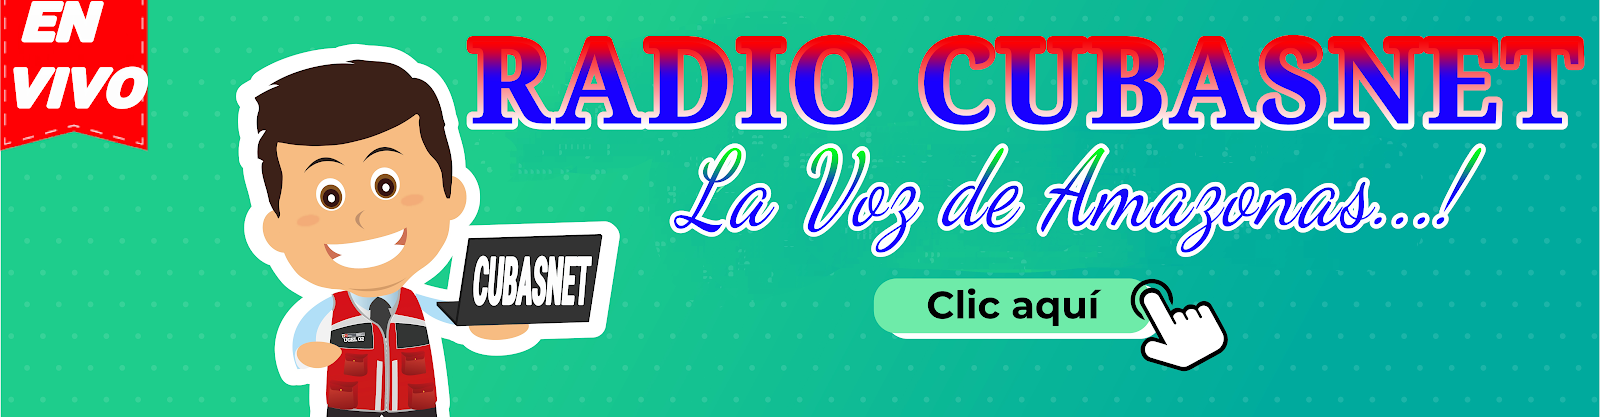 RADIO CUBASNET 100.5 FM